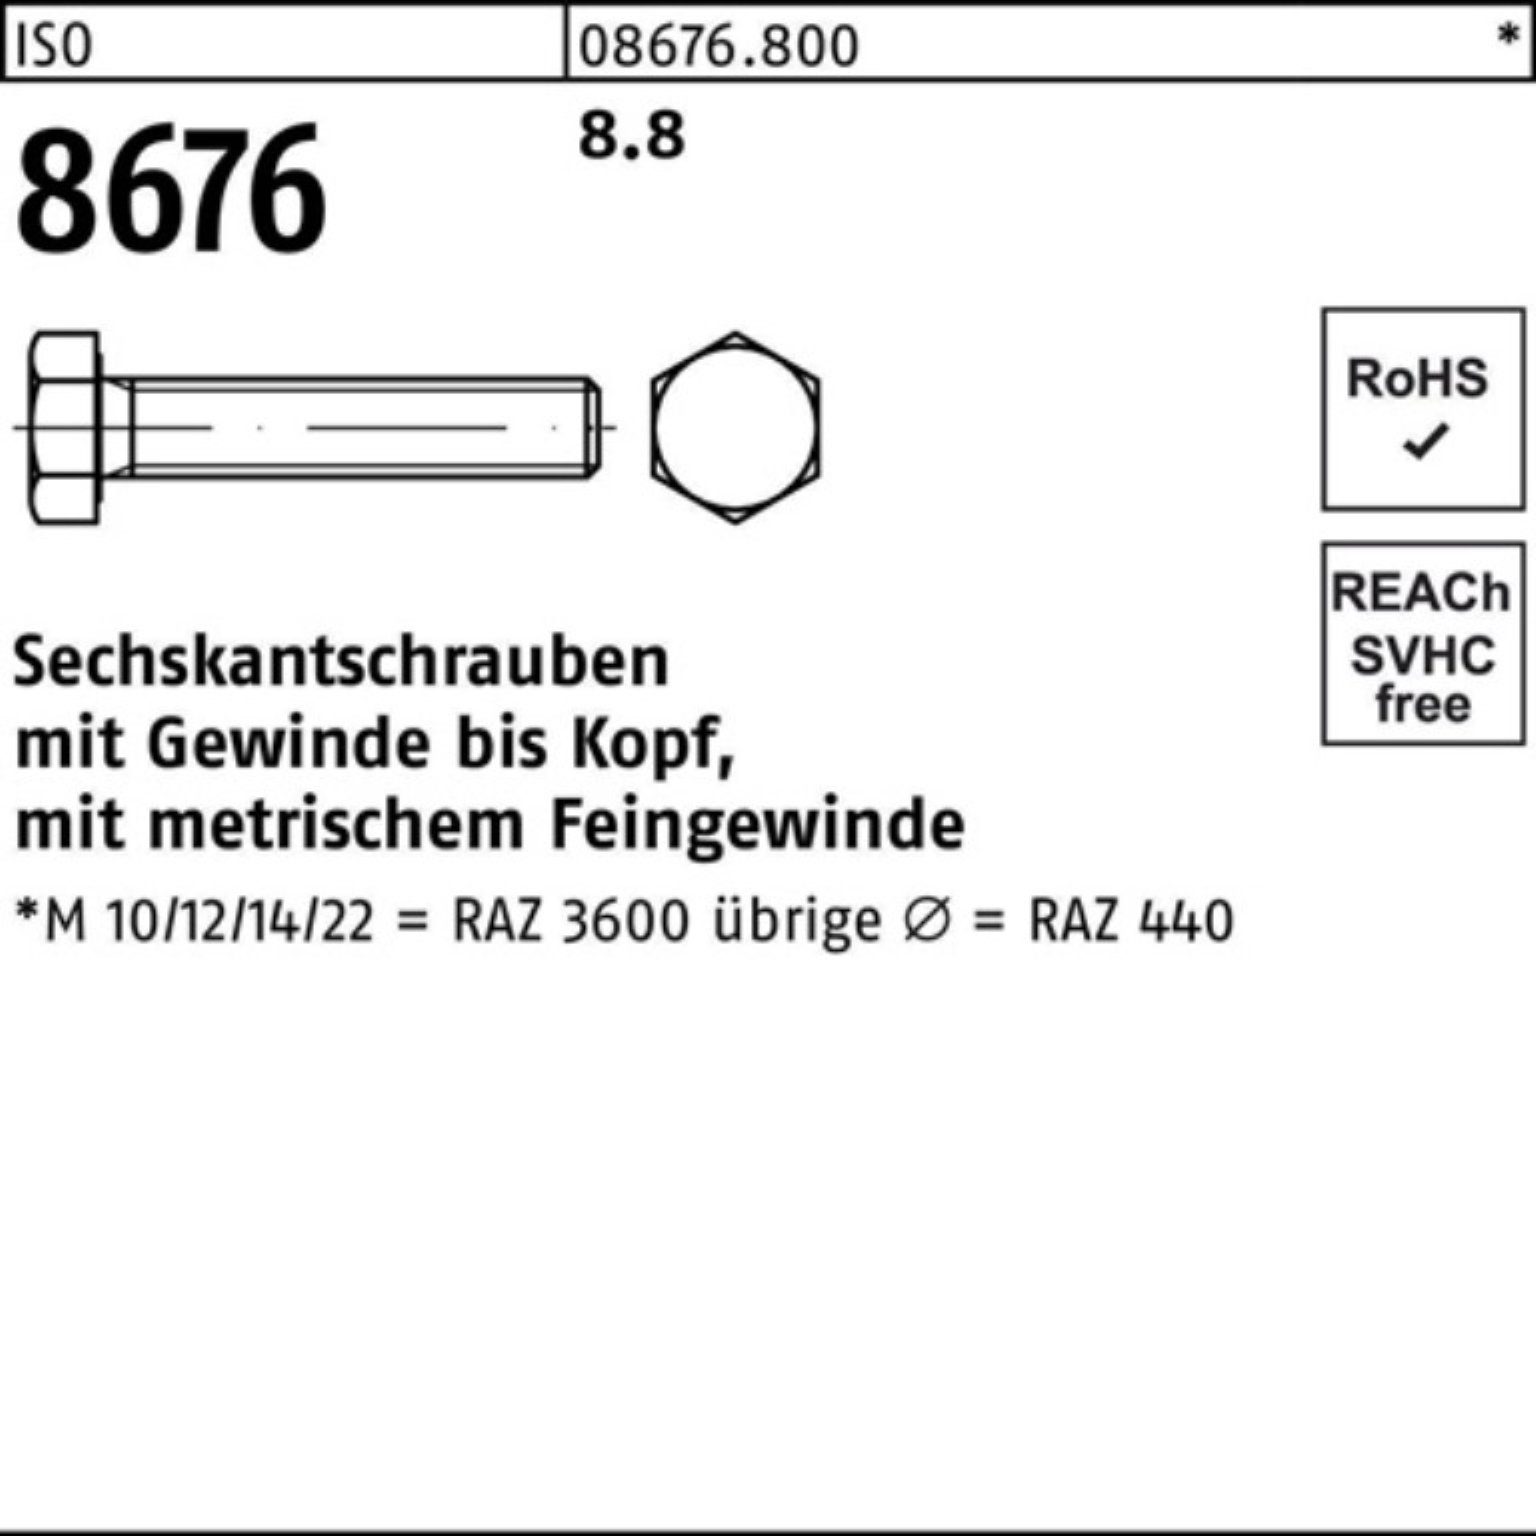 Reyher Sechskantschraube 8.8 Pack 200er I M10x1,25x 200 VG 8676 30 Stück Sechskantschraube ISO